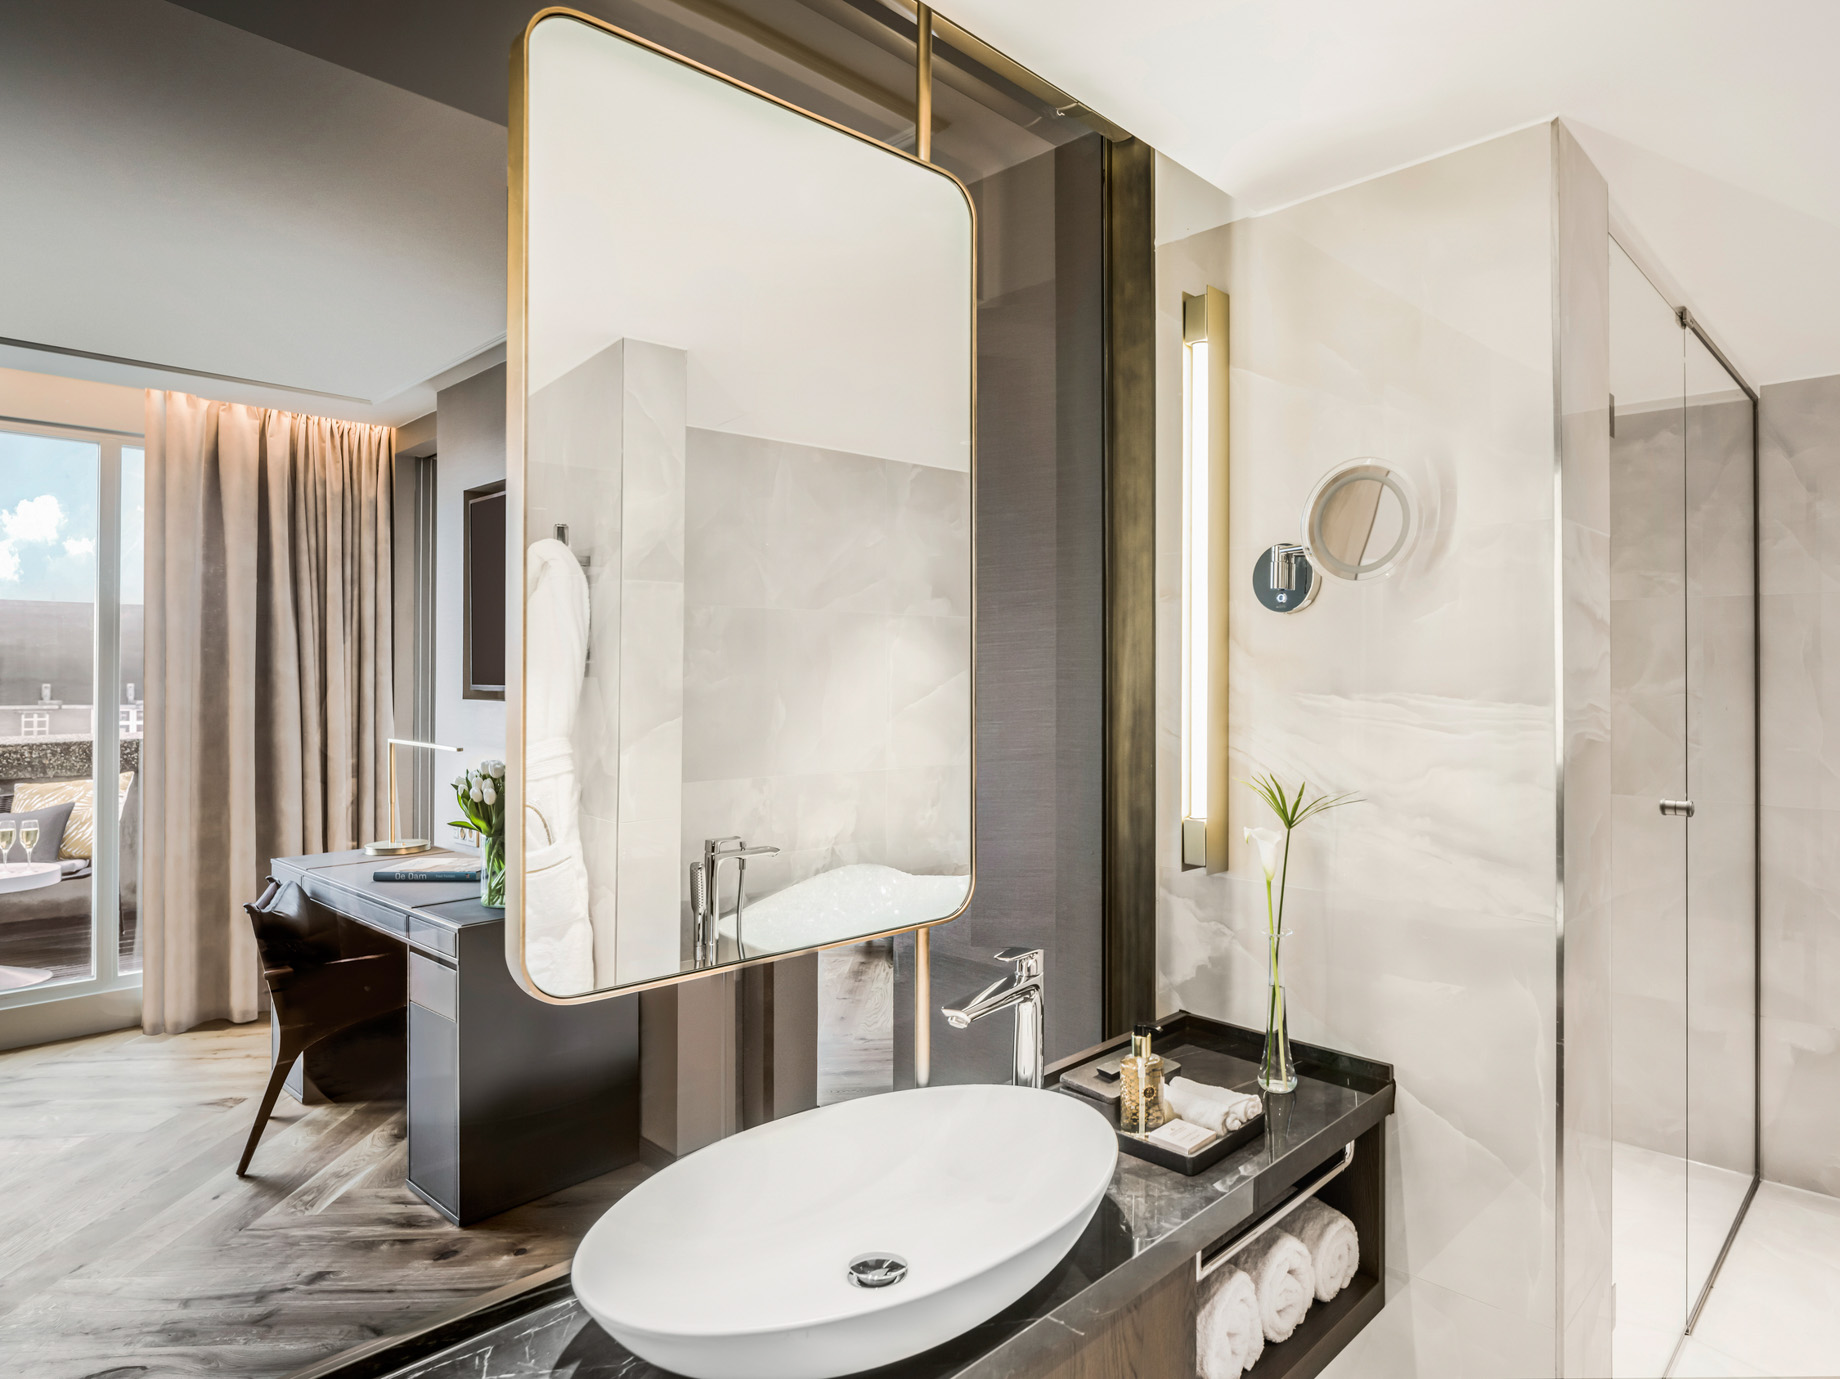 Anantara Grand Hotel Krasnapolsky Amsterdam – Netherlands – Guest Bathroom